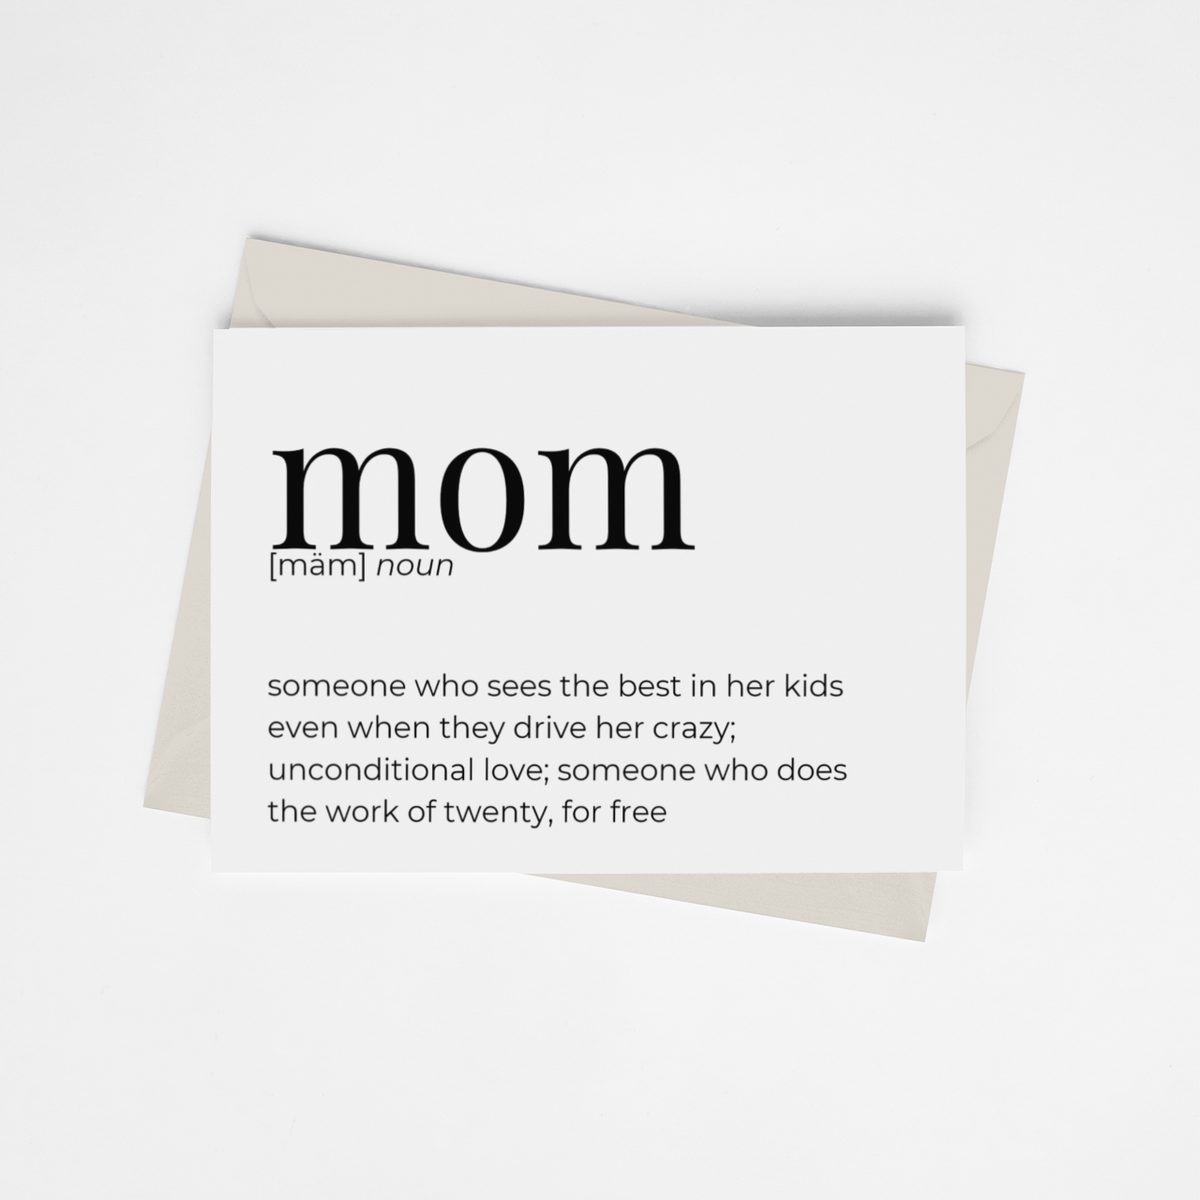 Definition Greeting Card: Plant Mom